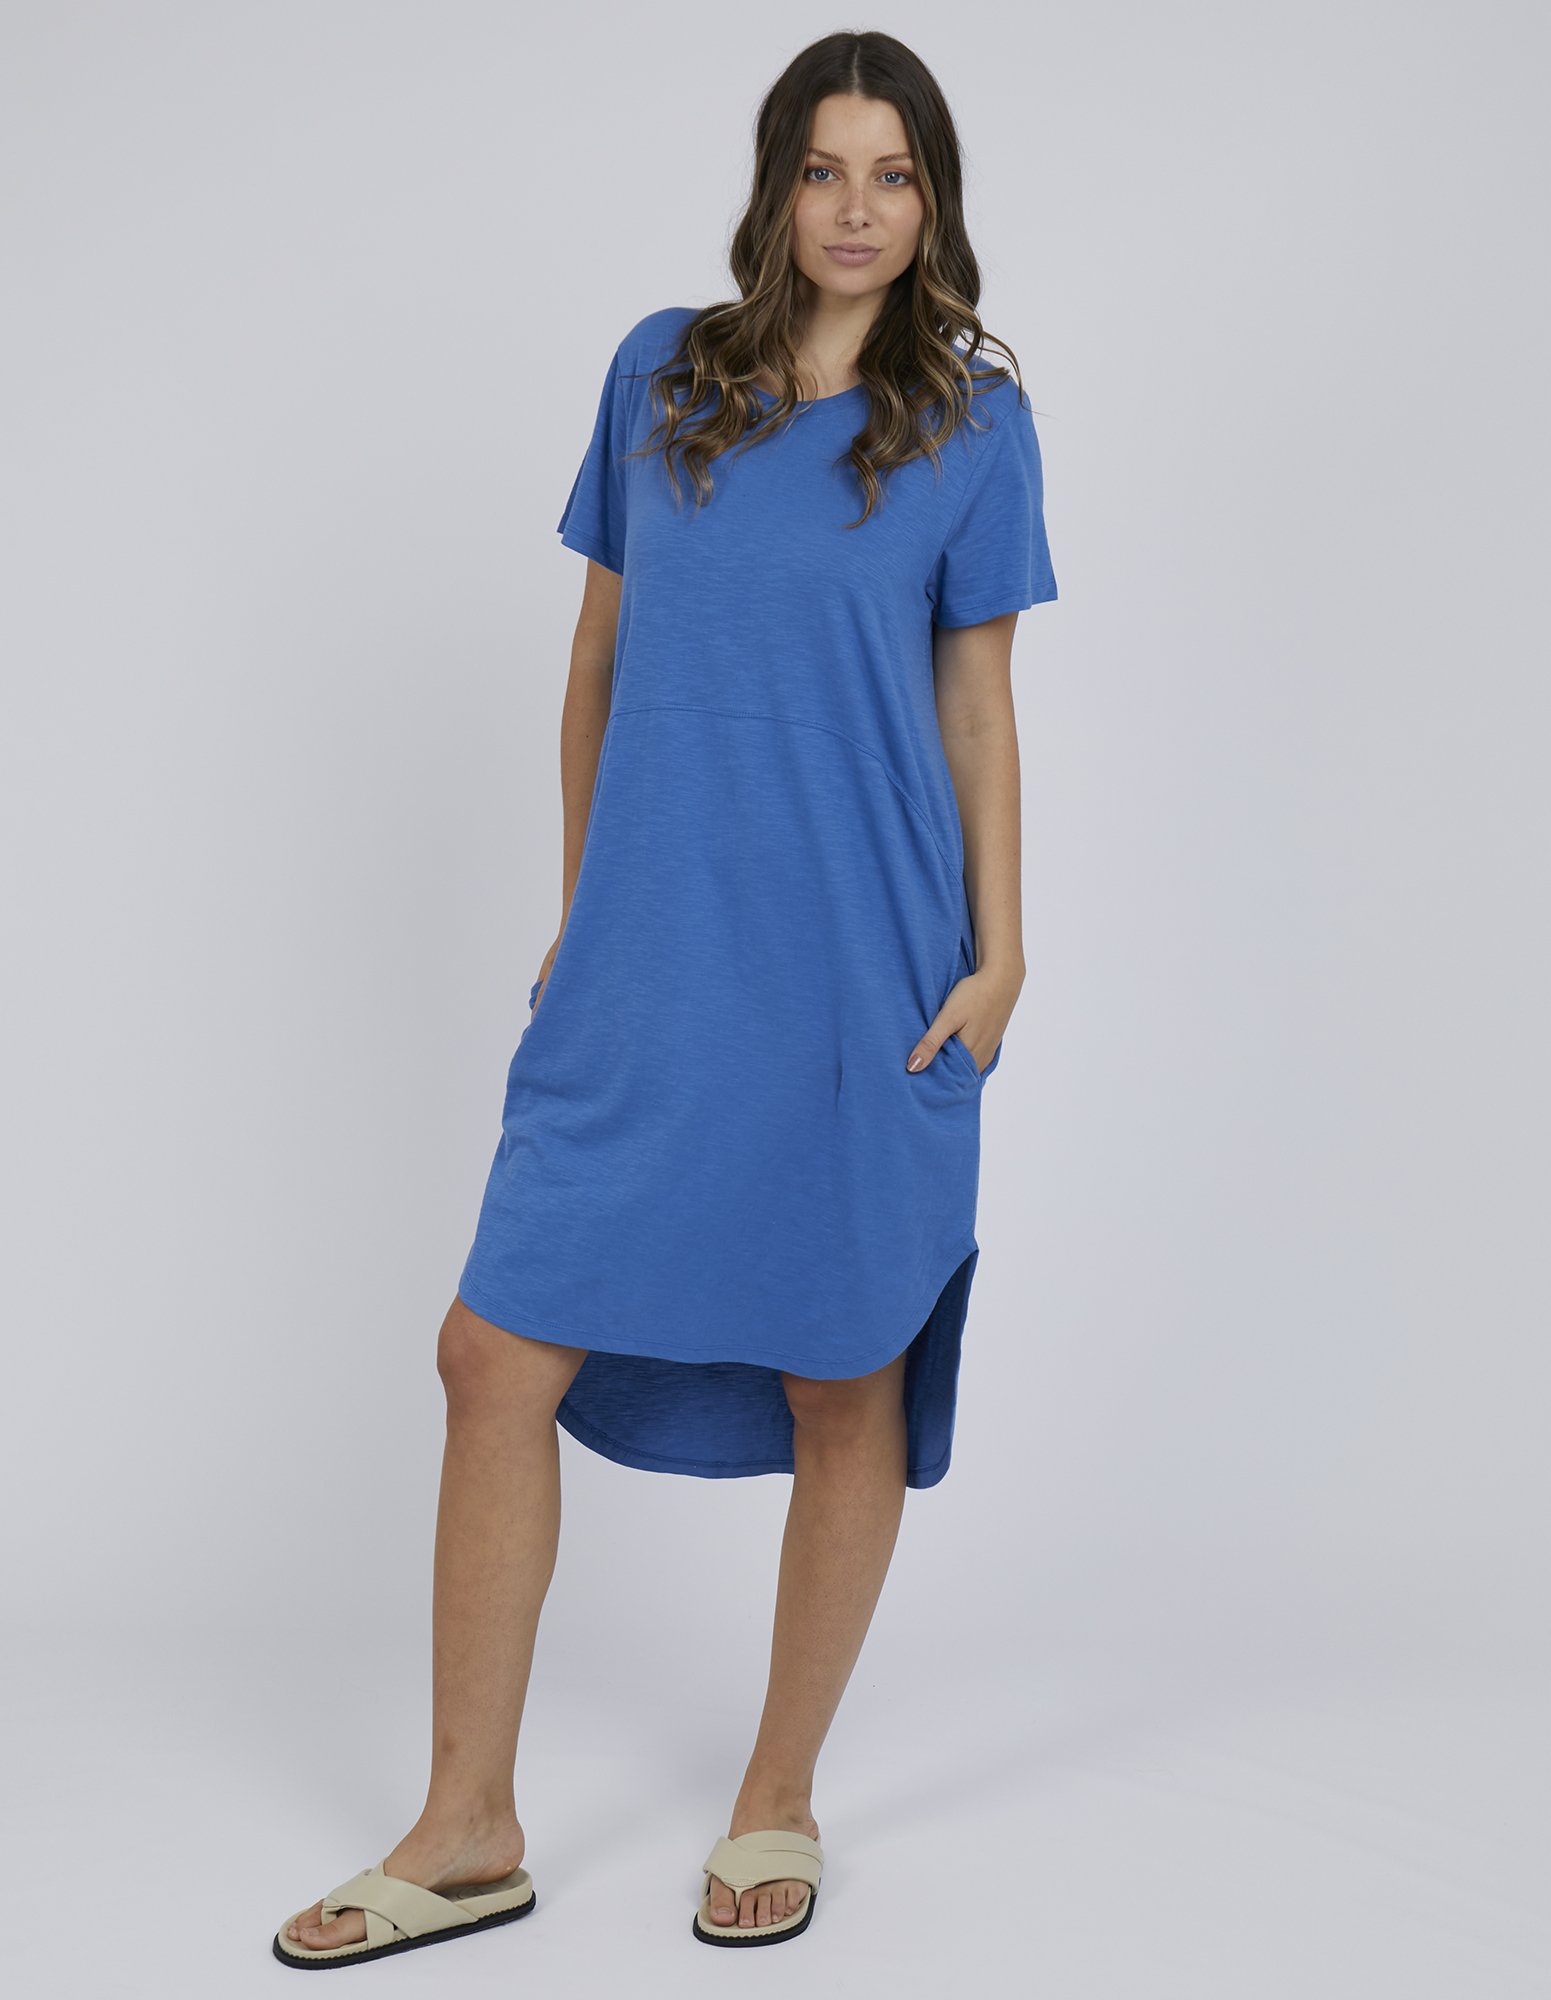 Foxwood Bayley Dress - Blue - Women's Clothing - Foxwood S22